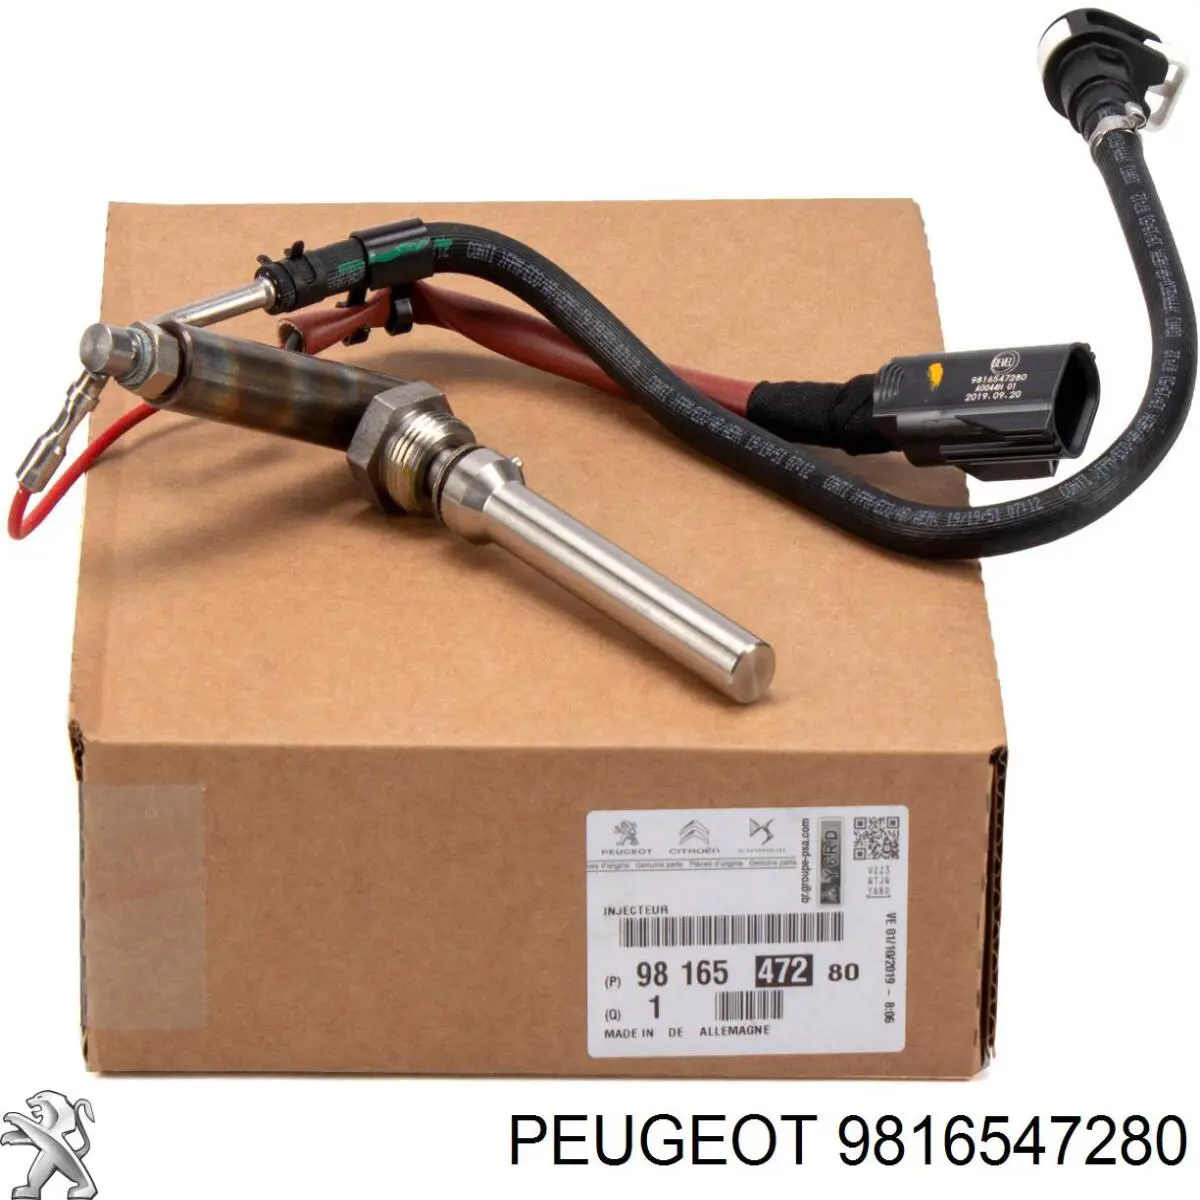 9816547280 Peugeot/Citroen inyector adblue